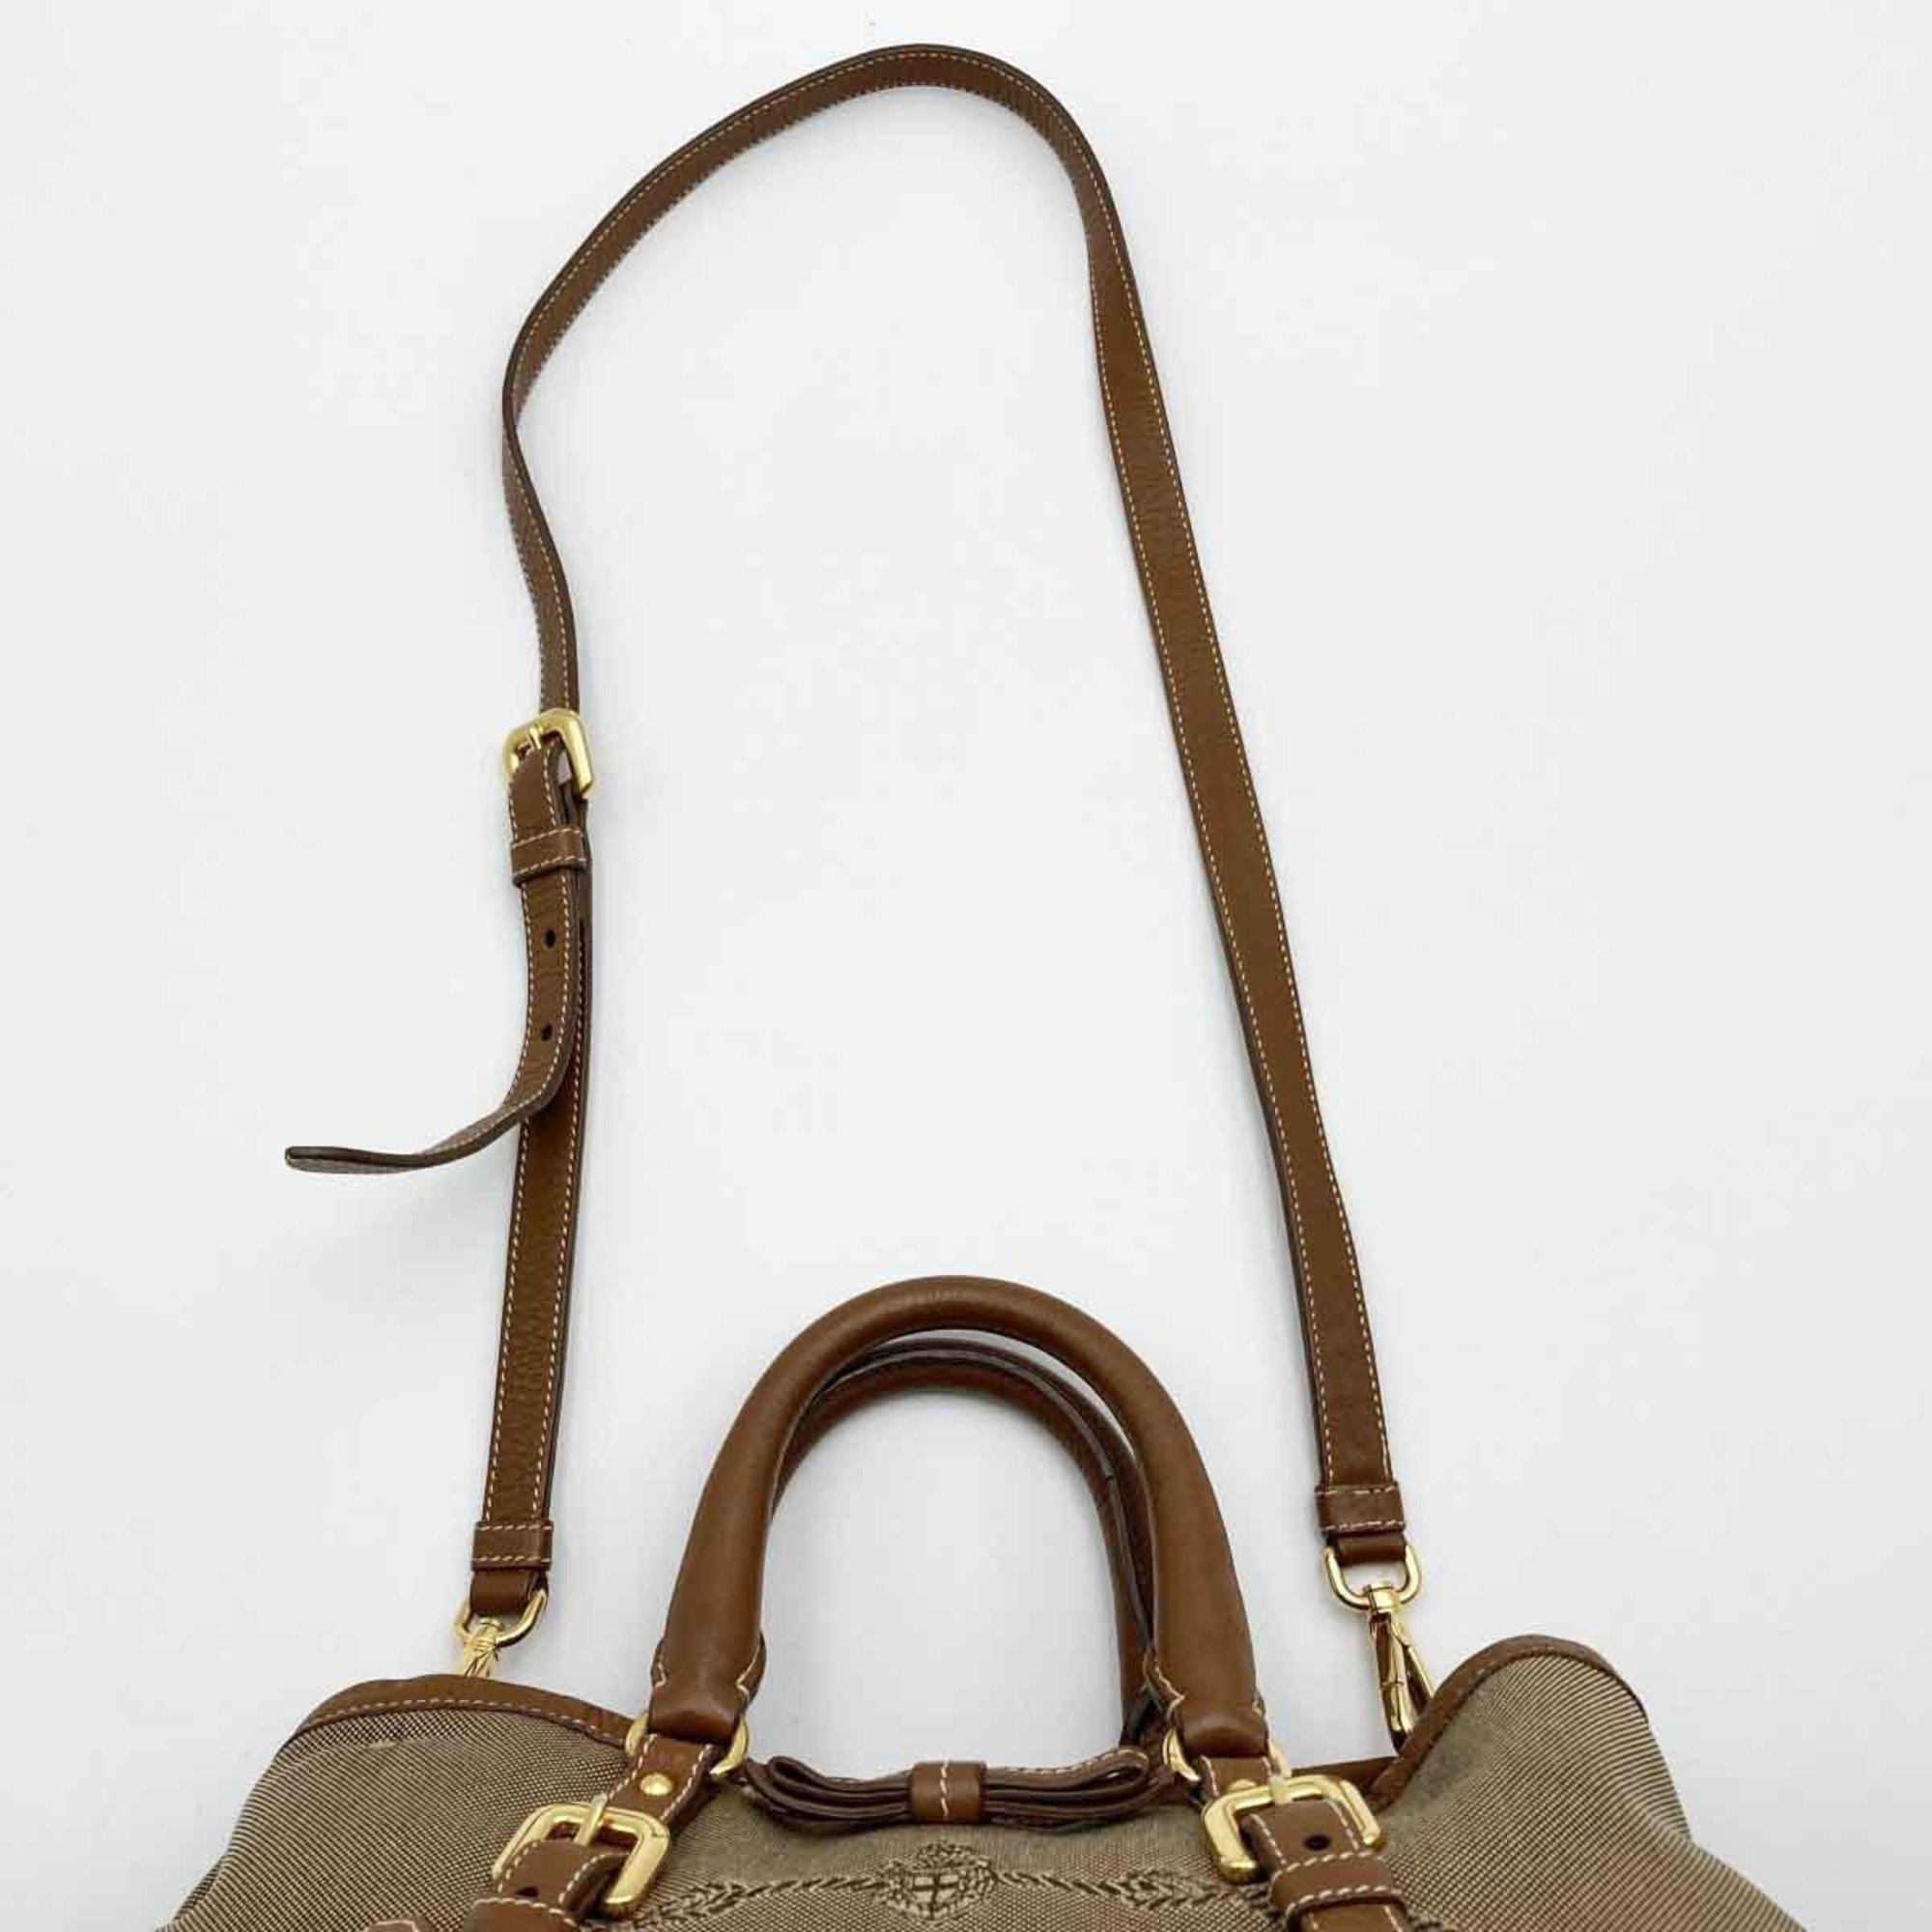 PRADA Jacquard Shoulder Bag Handbag Brown Canvas Ladies Men ITOYEITD6Q88